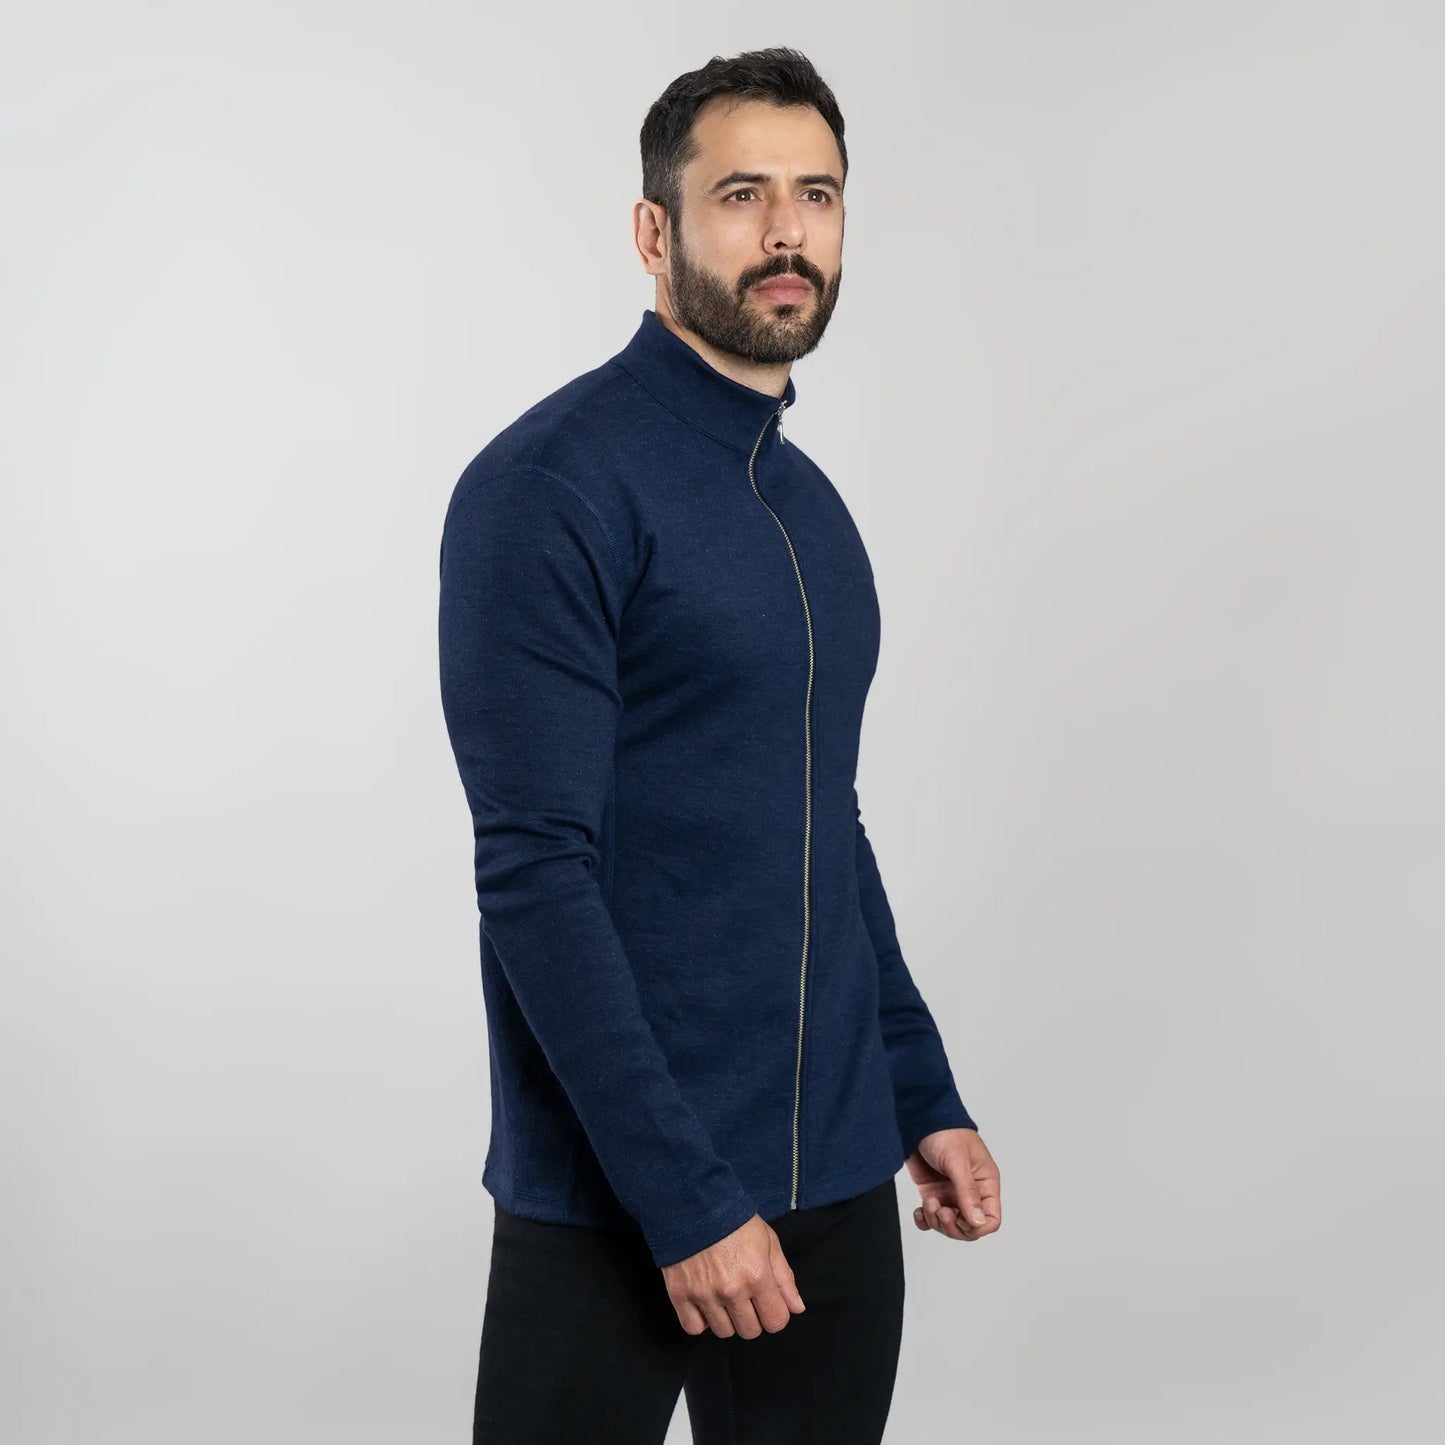 mens comfortable fit jacket full zip color navy blue